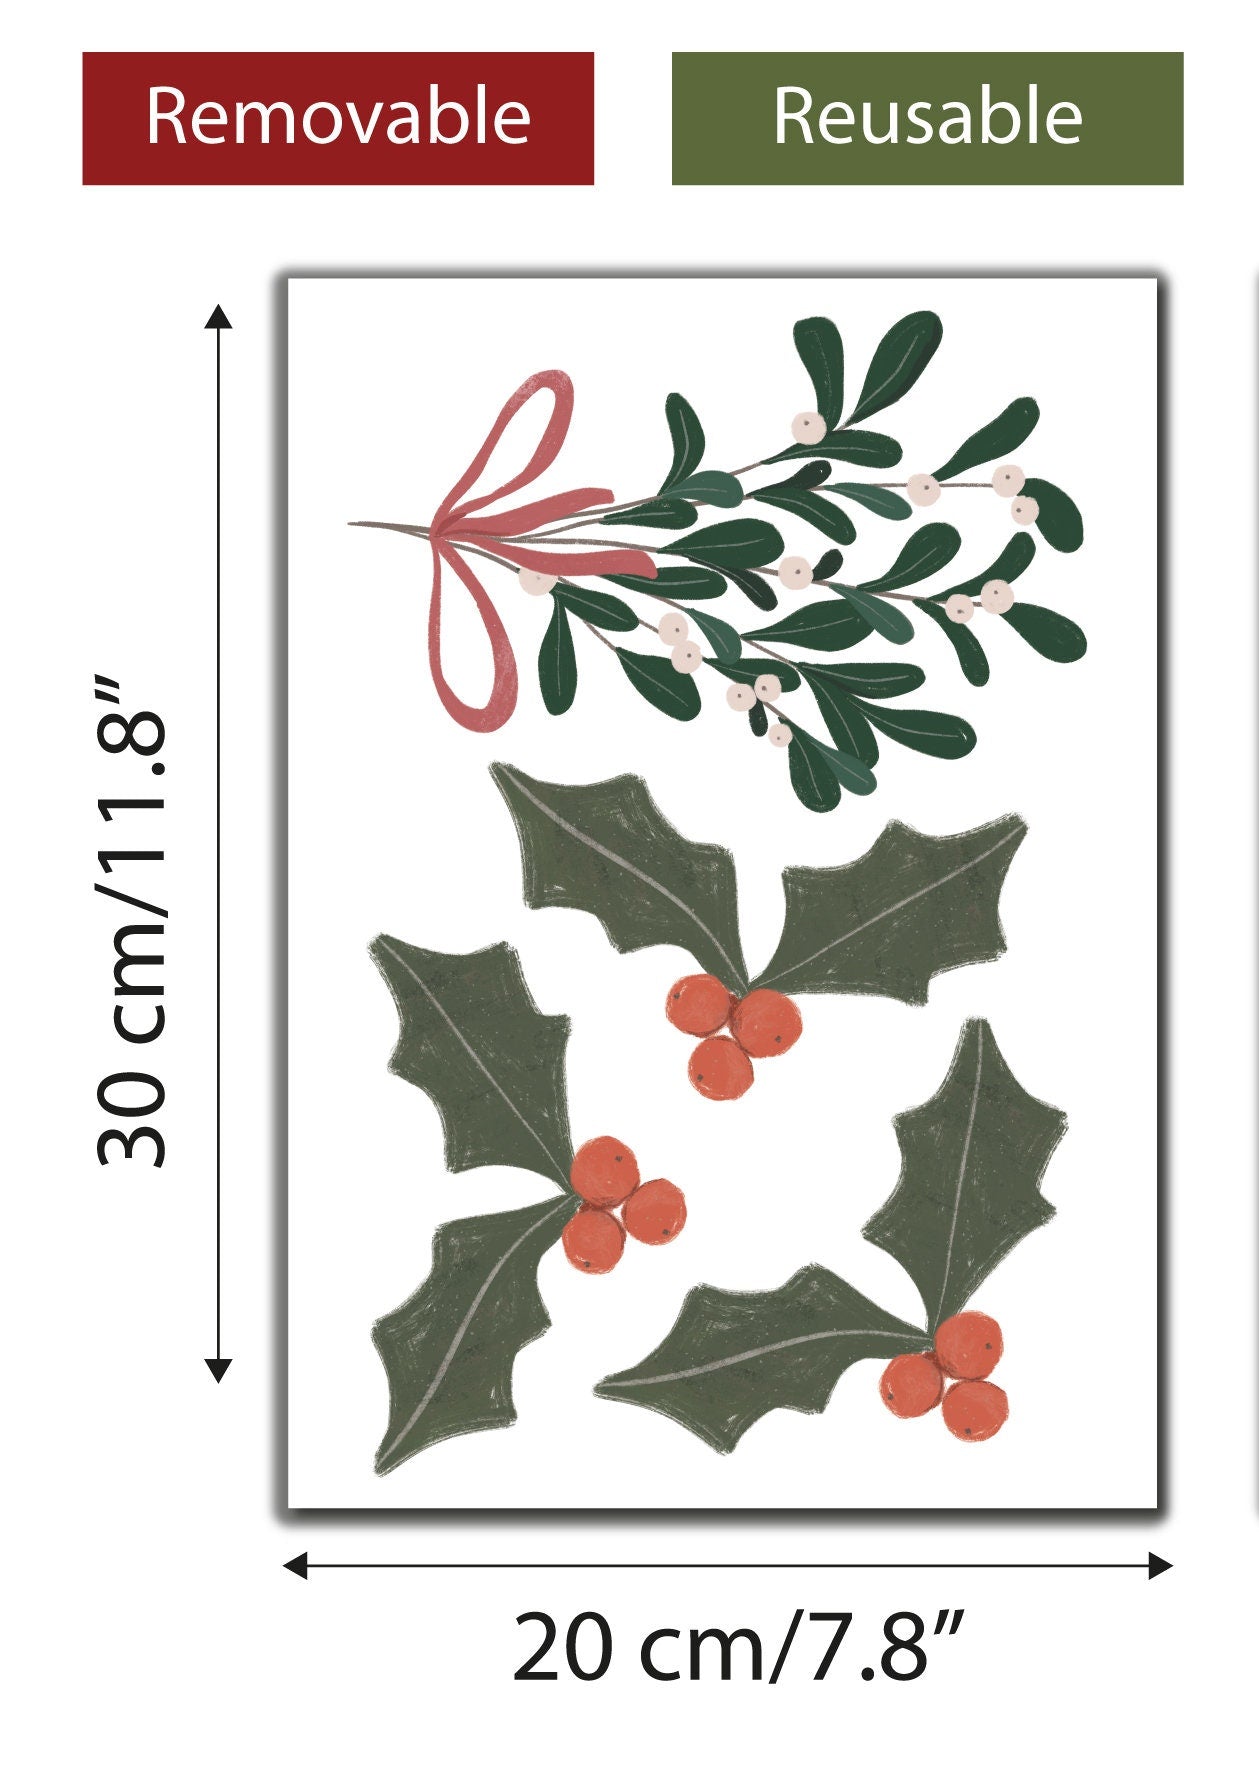 Christmas Holly & Mistletoe Window Stickers Decorations Xmas Decals